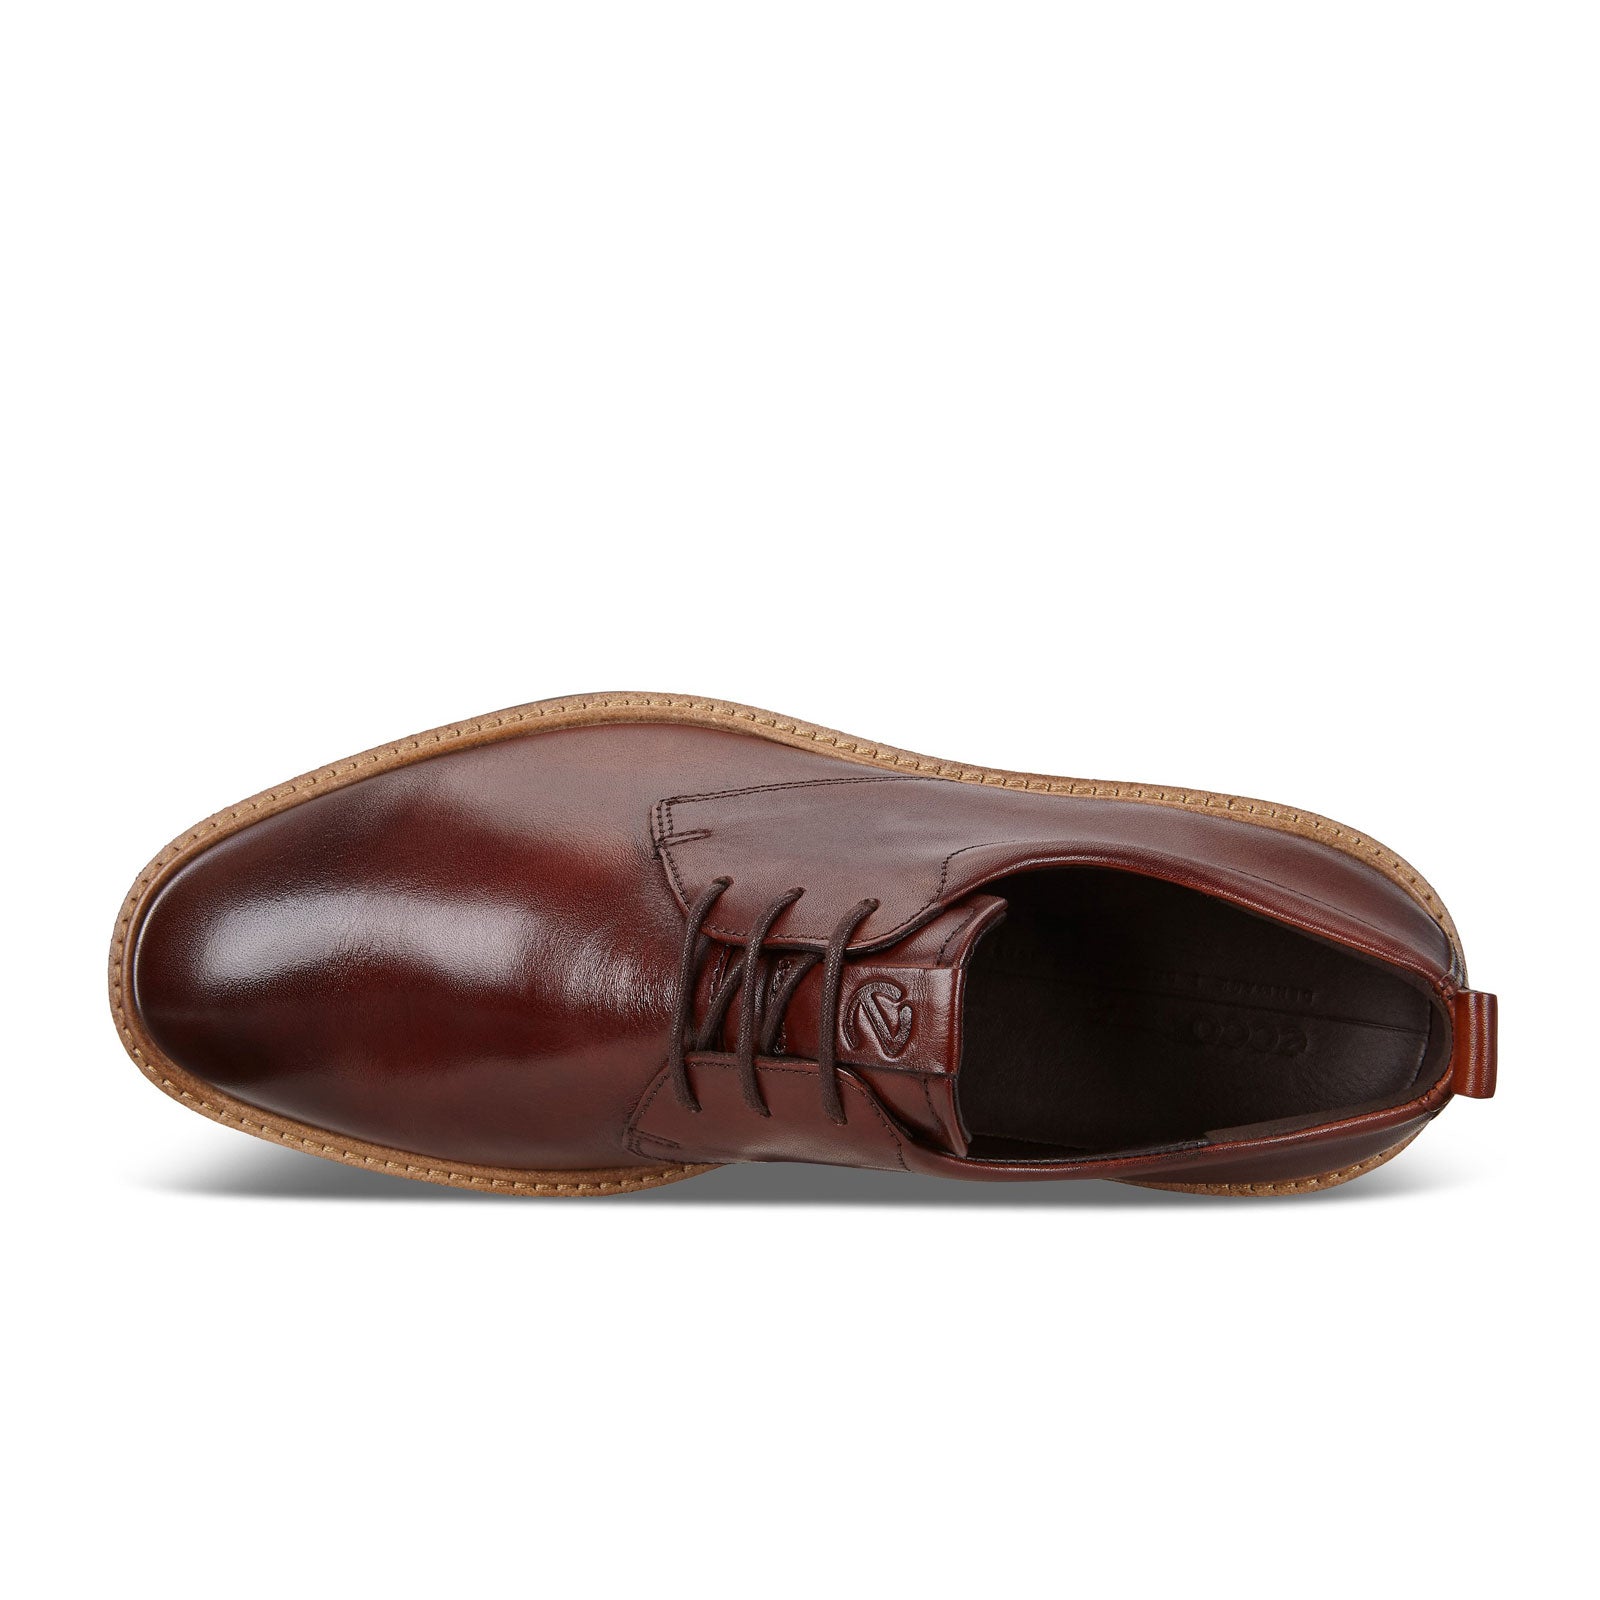 Ecco St. 1 Hybrid Plain Toe Oxford (Men) - Cognac Dress-Casual - Oxfords - The Heel Shoe Fitters